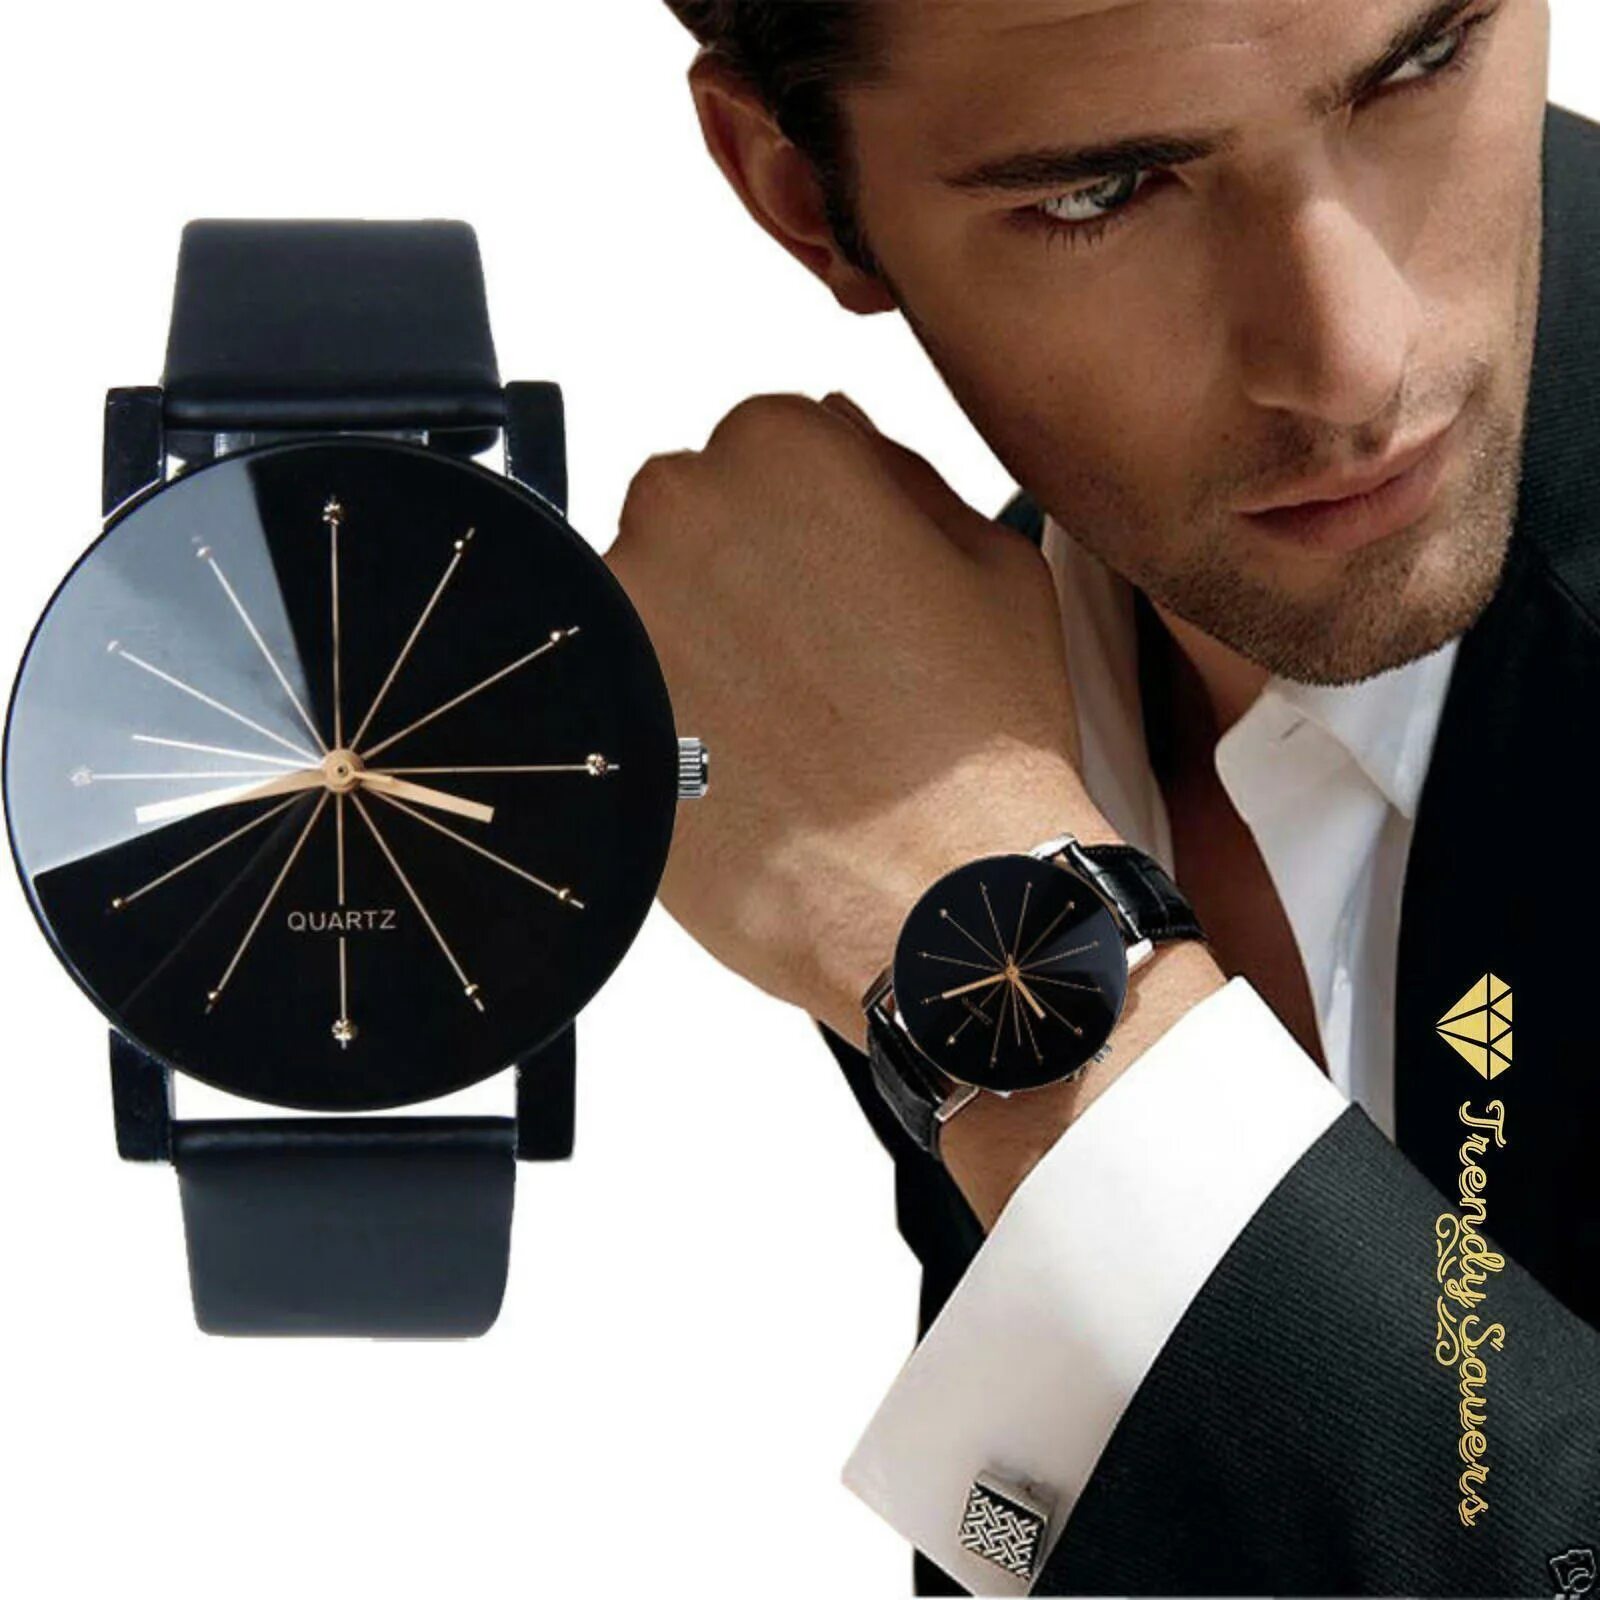 Заказать часа интернет. Часы reloj hombre. Модные часы мужские. Часы для мужчин наручные. Элегантные часы мужские.